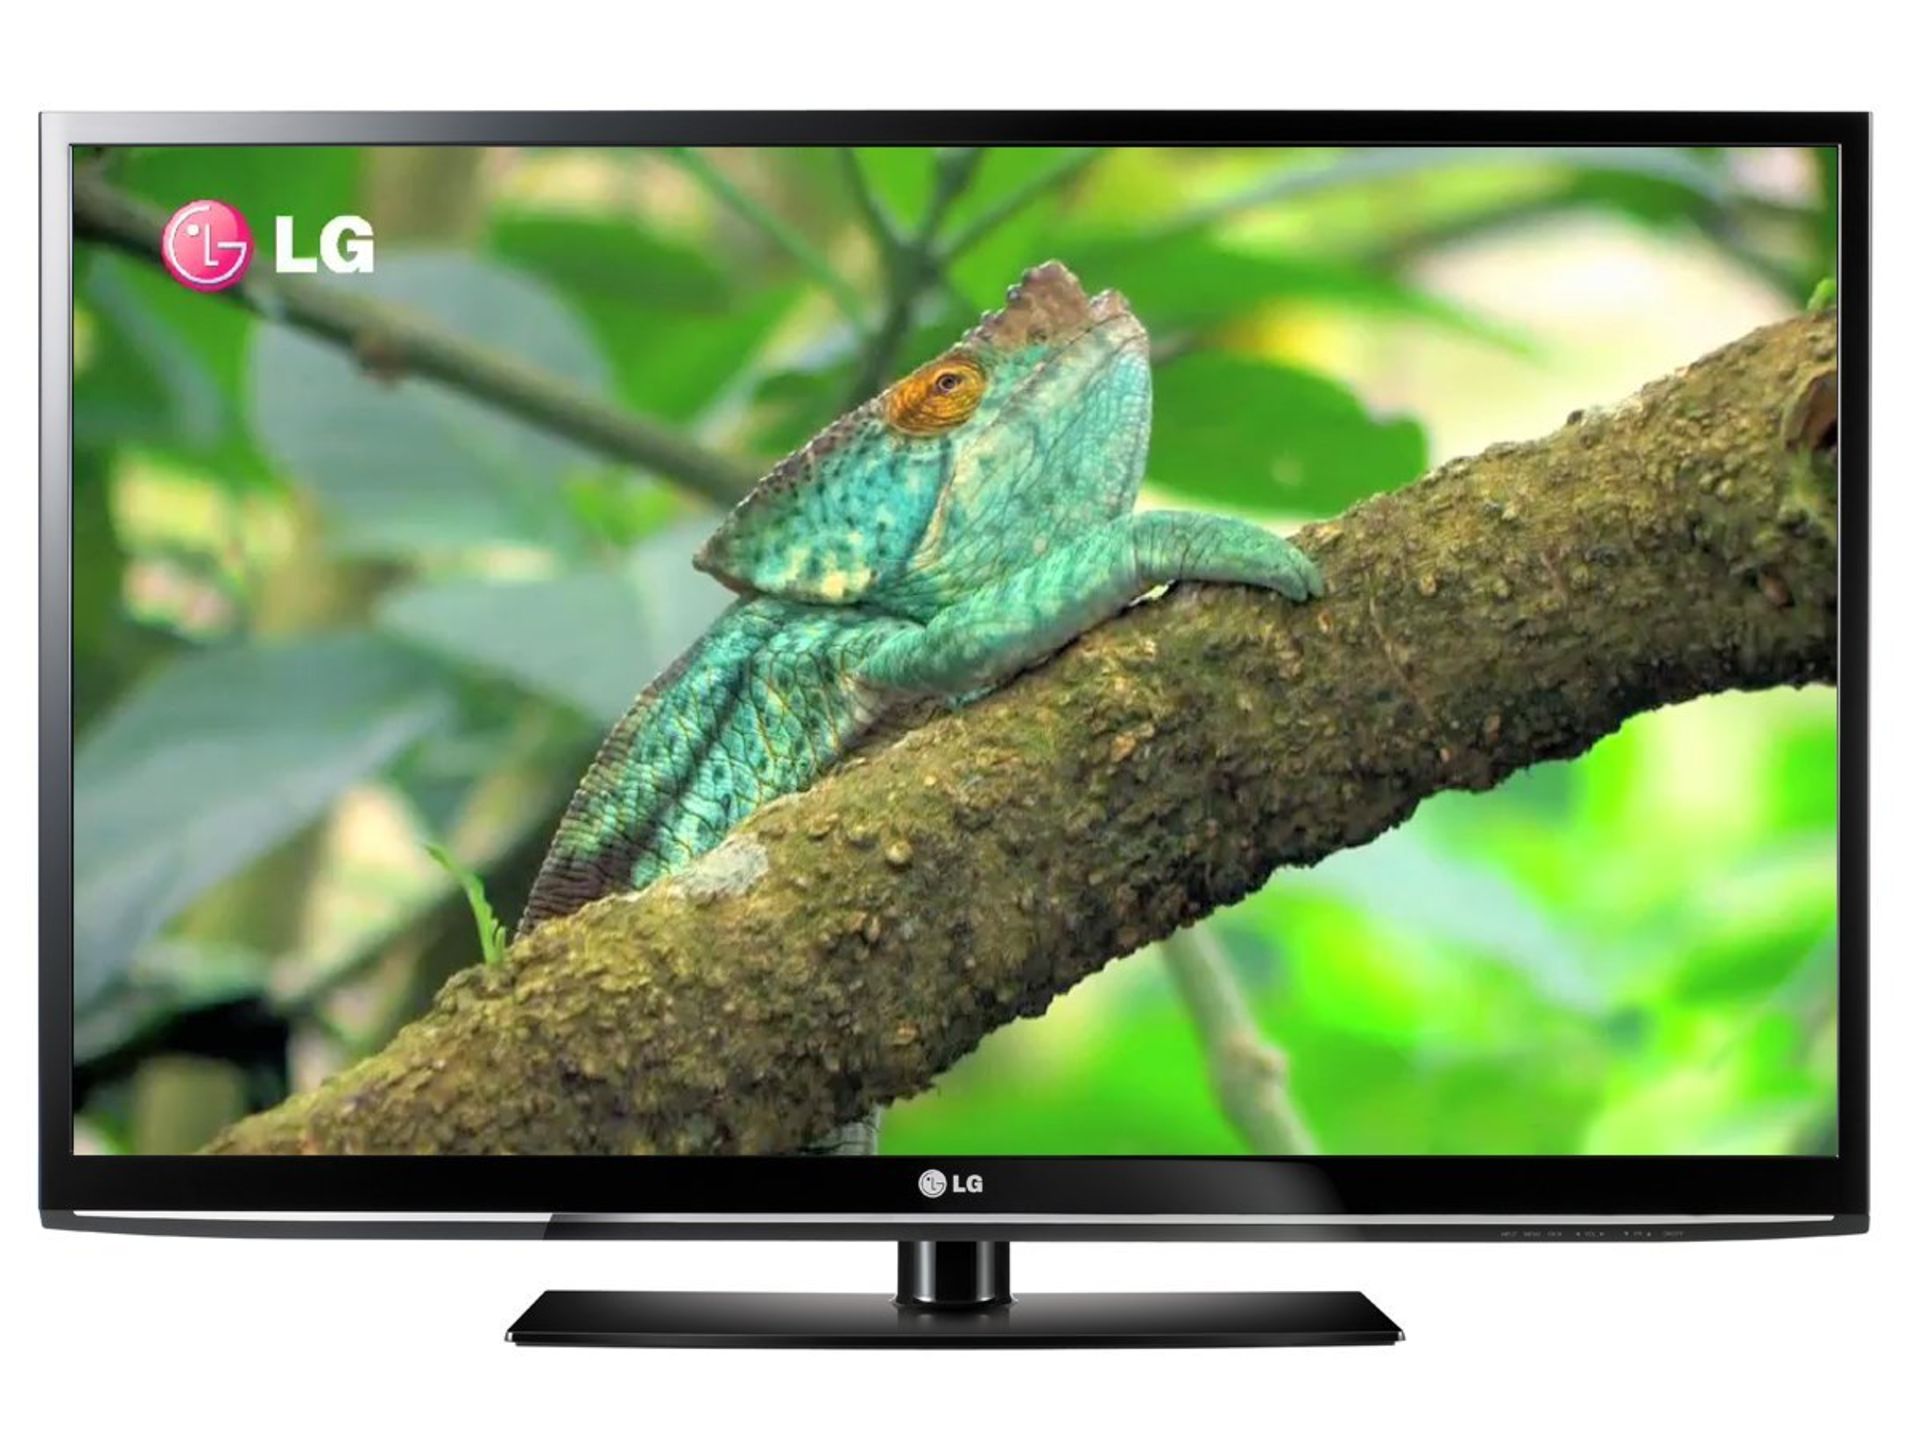 LG 50PK350 50" HD PLASMA TV WITH FREEVIEW / GRADE: REFURBISHED (TV4) [B1]